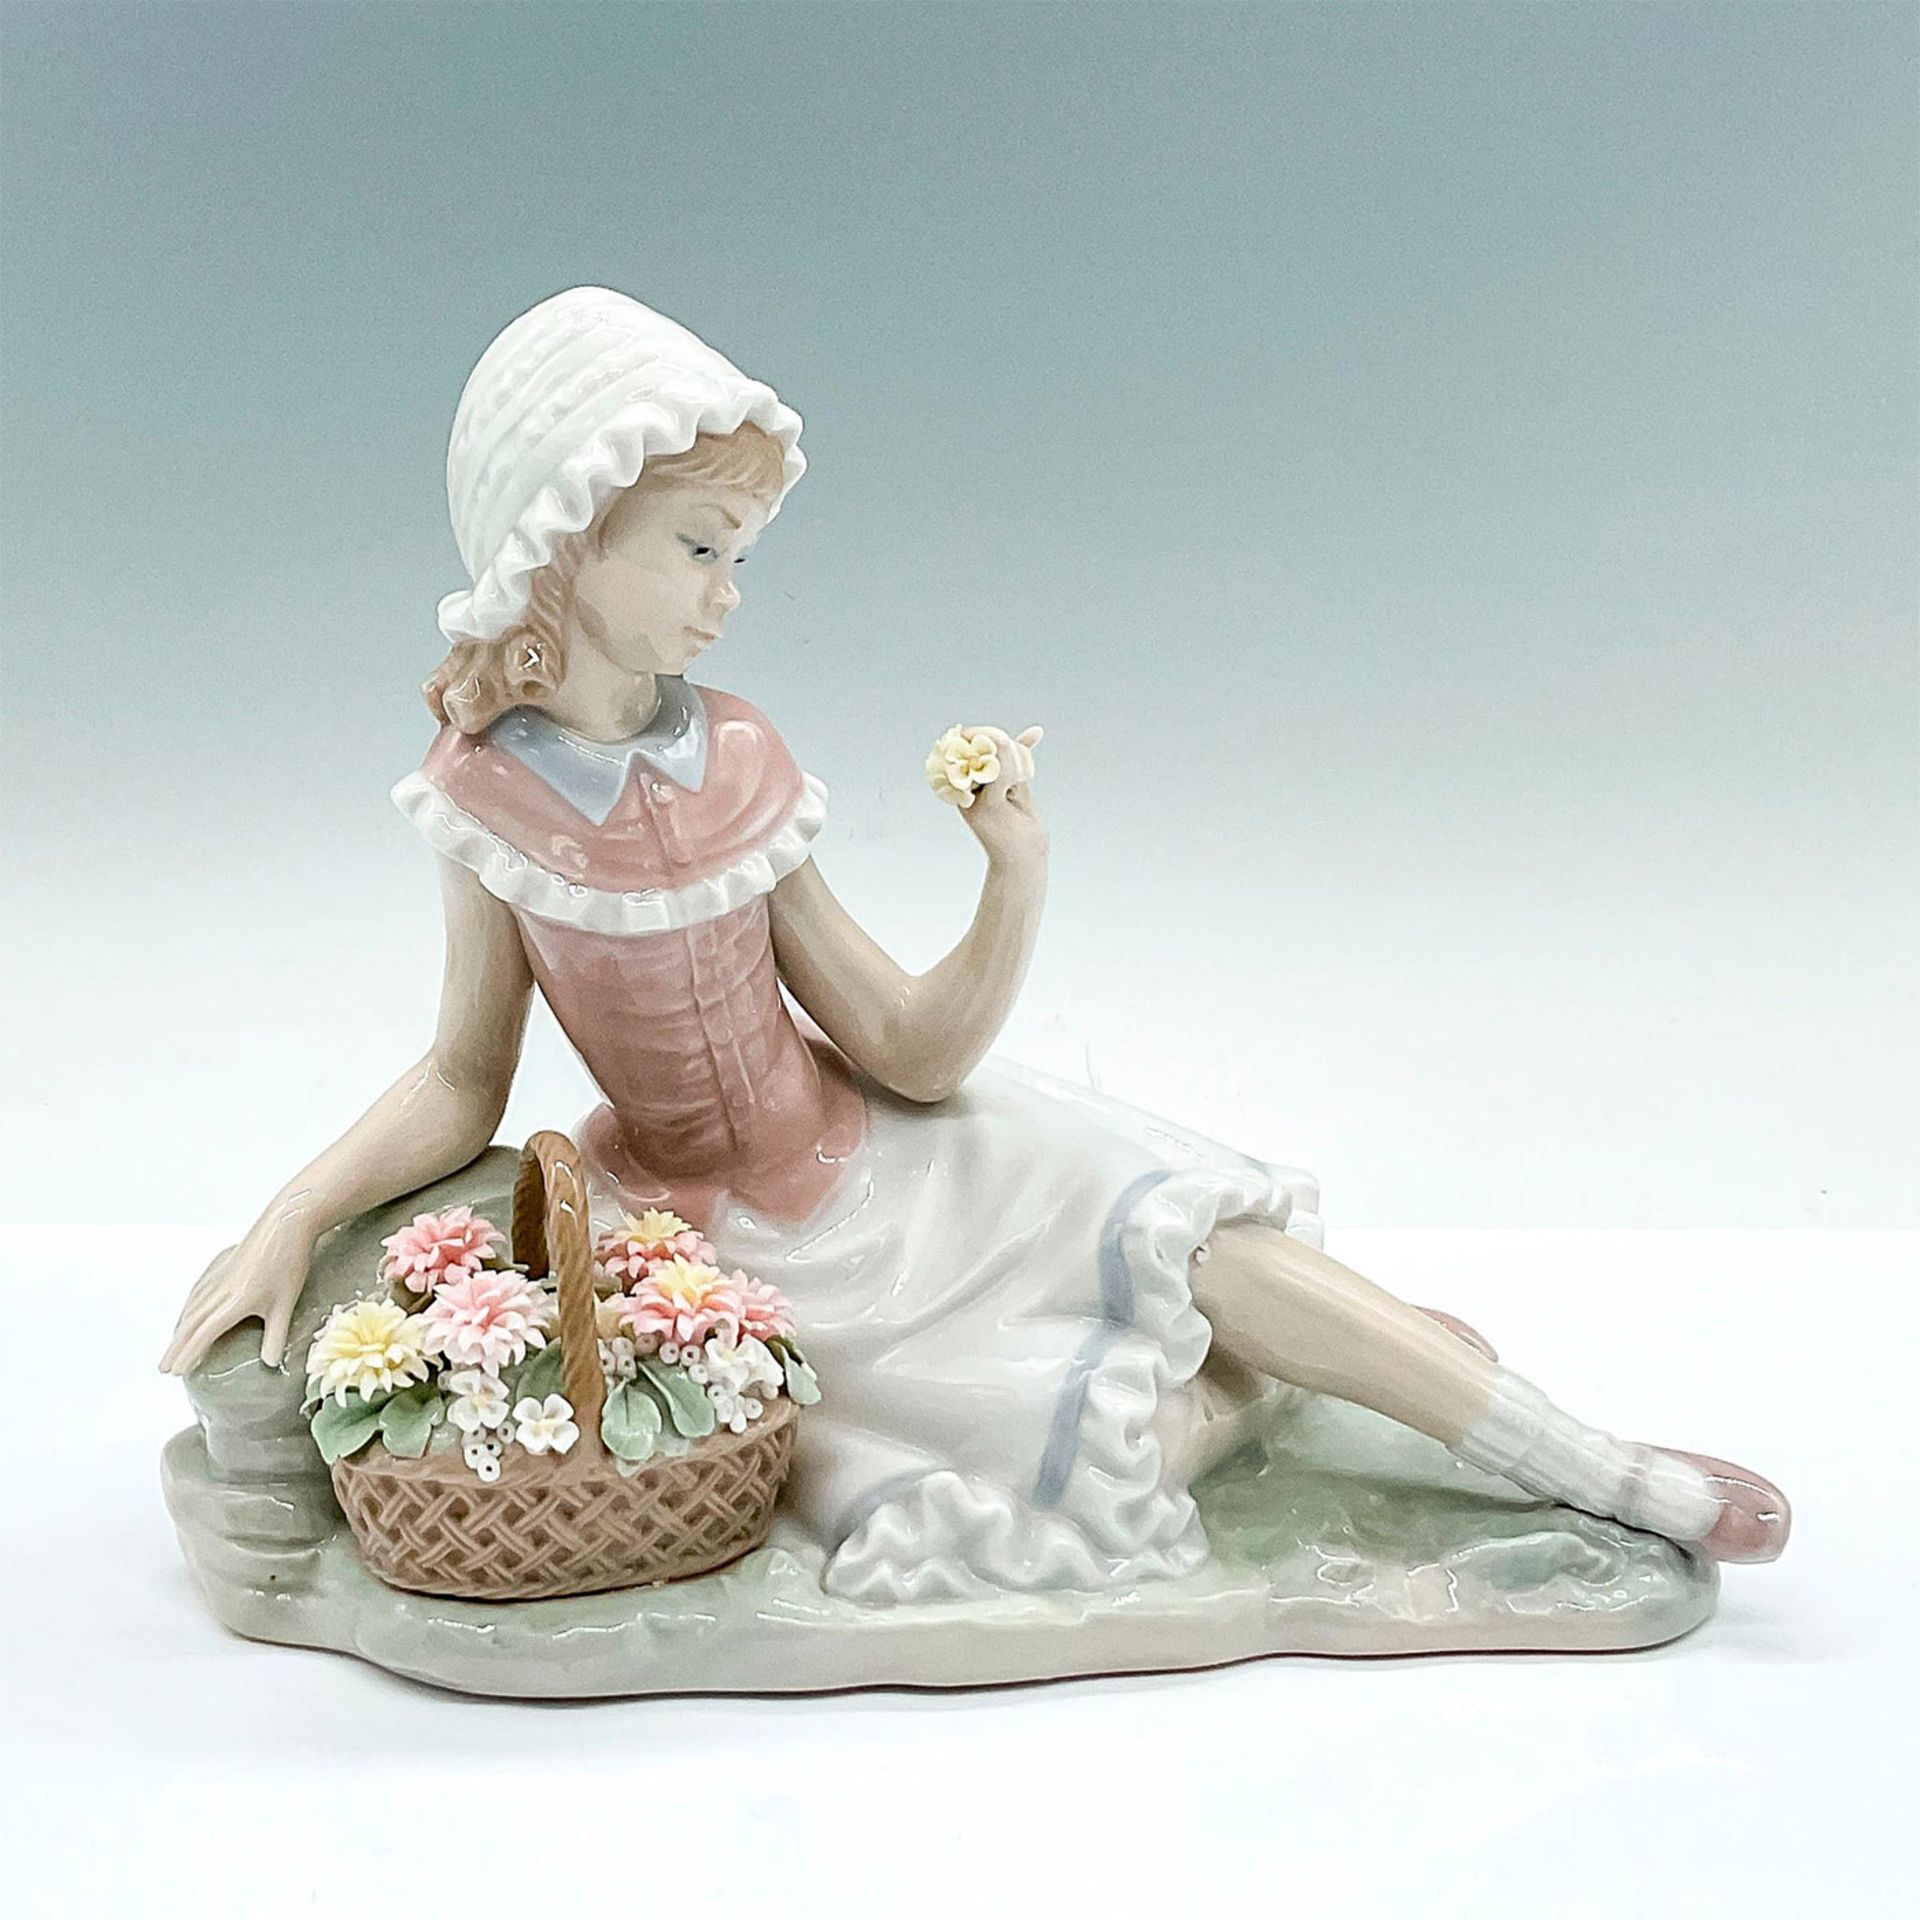 Admiration 1004907 - Lladro Porcelain Figurine